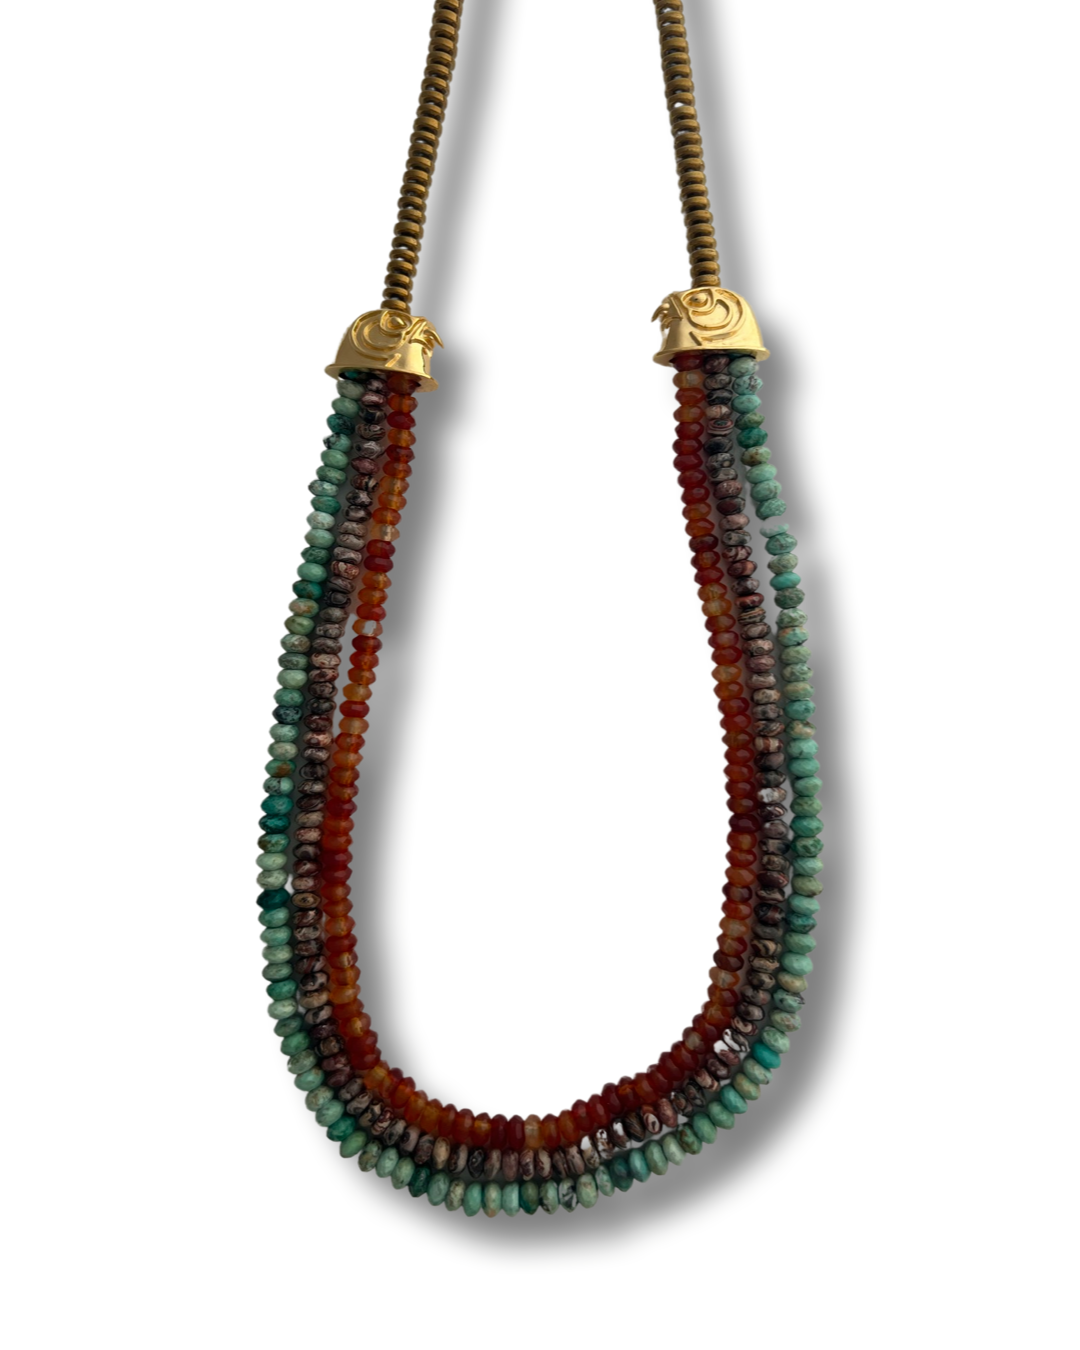 Neferuptah Horus head collar with turquoise, carnelian, jasper and golden hematite,